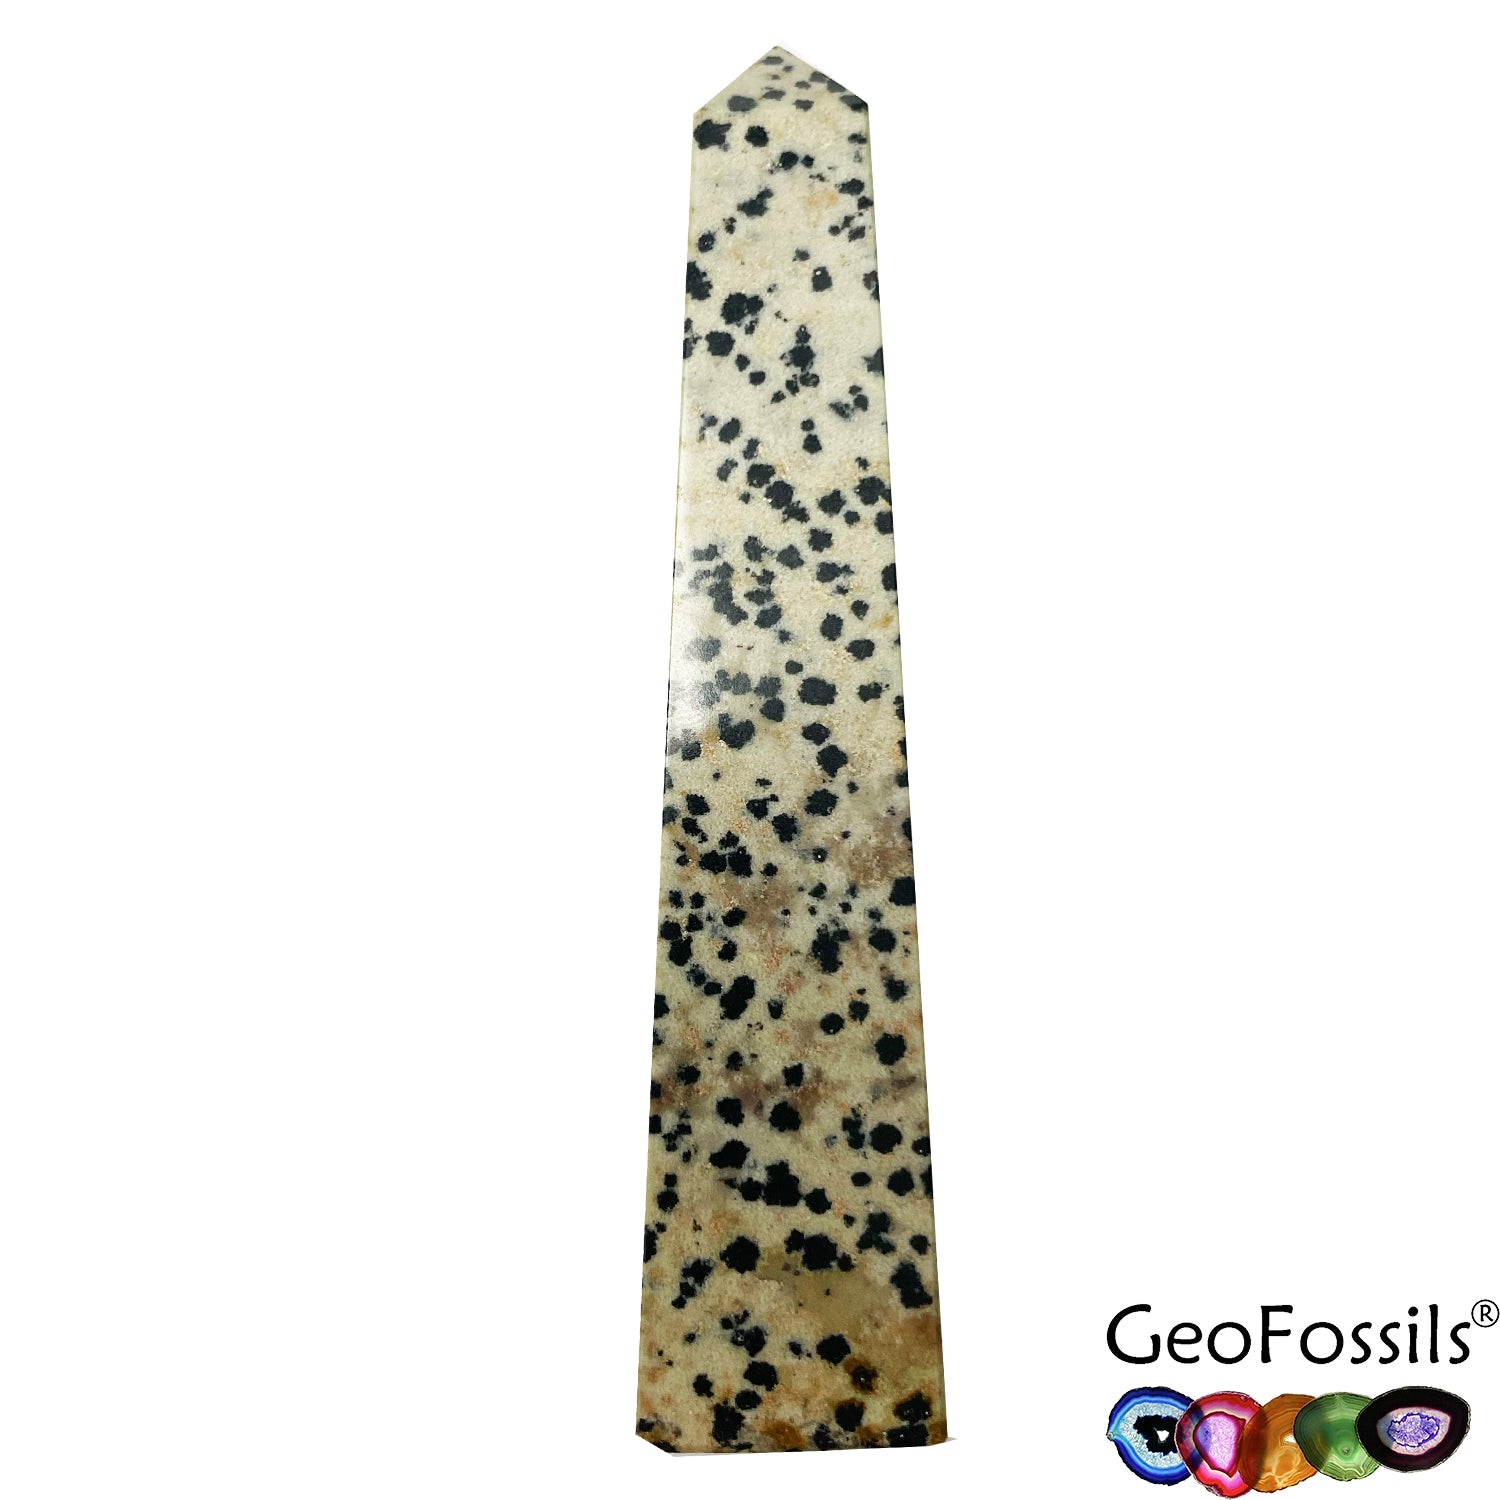 GeoFossils Dalmation Stone £18